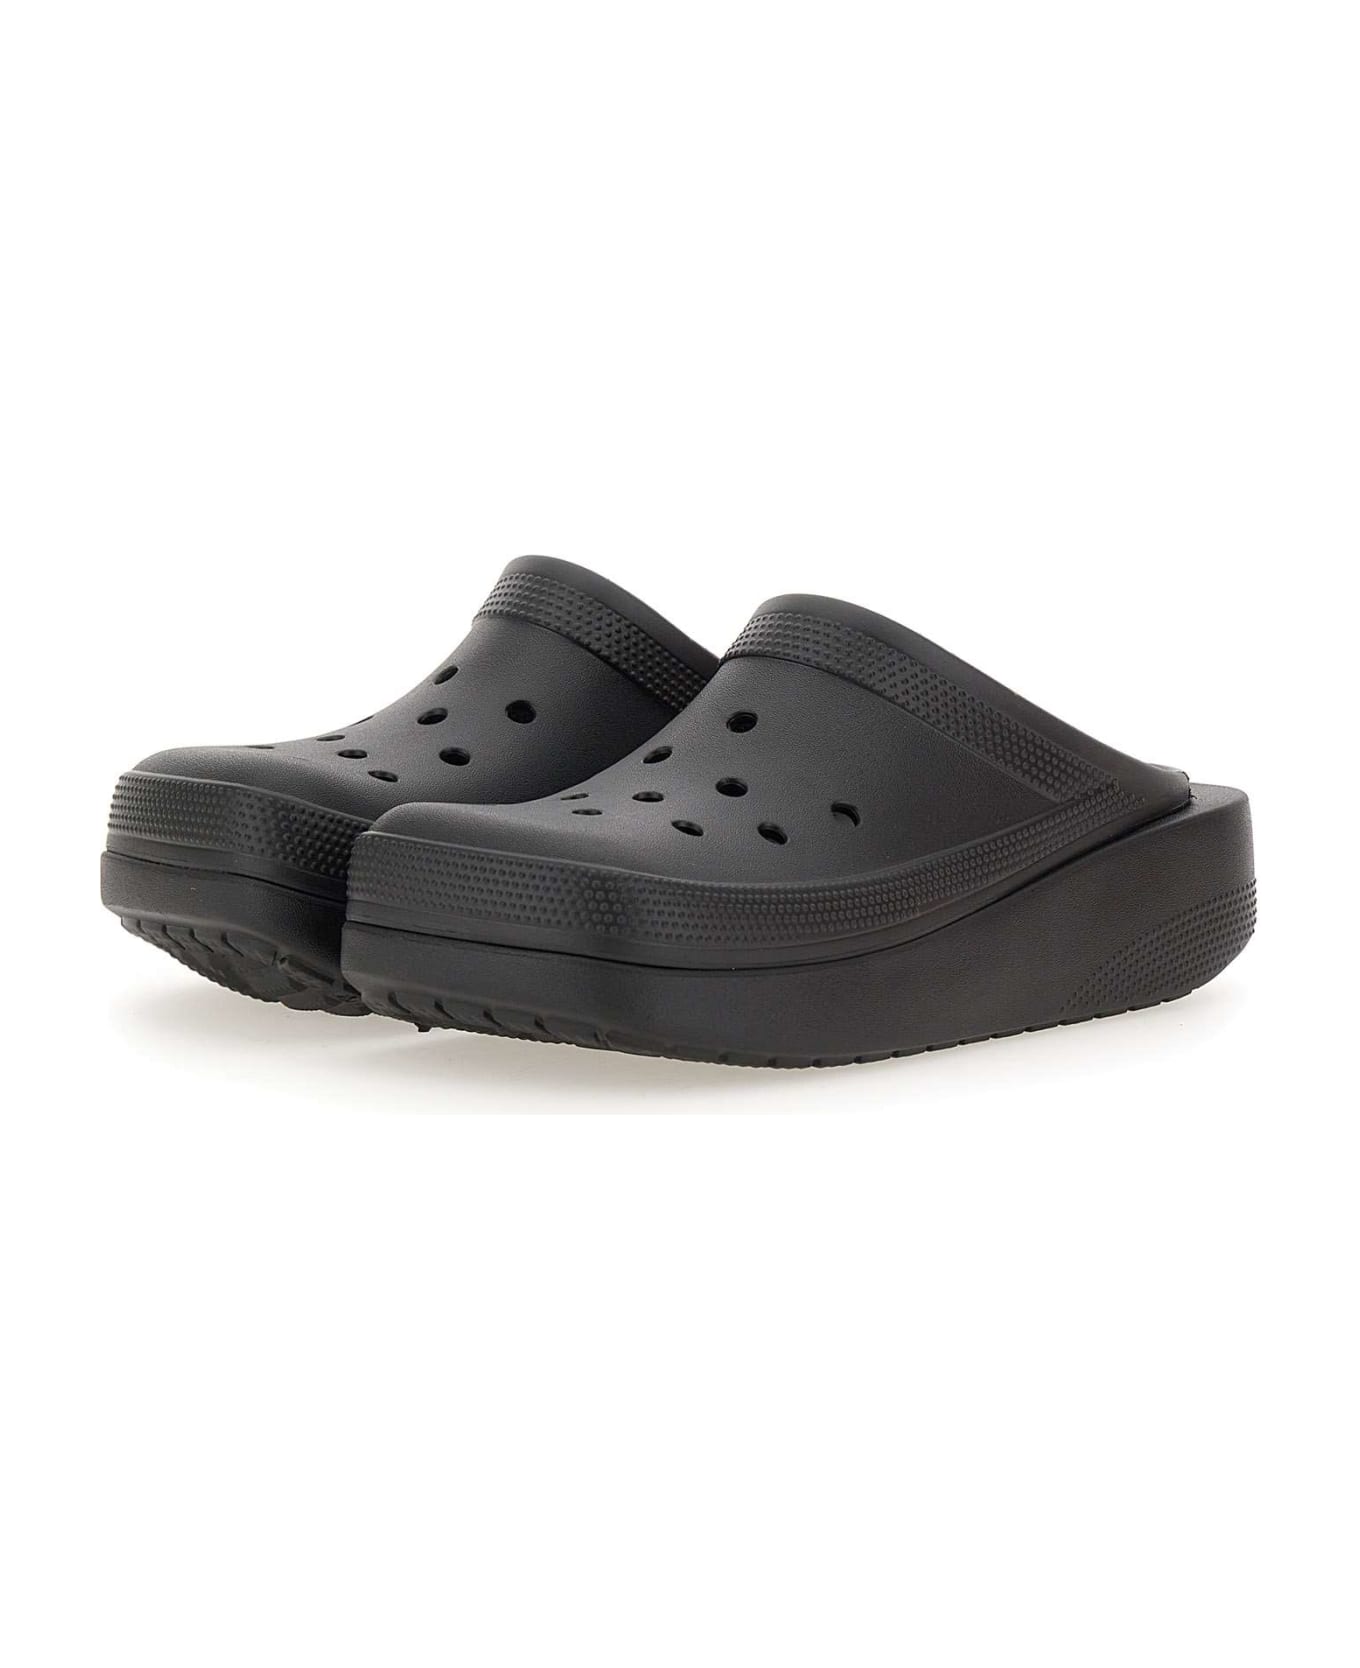 Crocs 'classic Blunt Toe' Slippers - Black